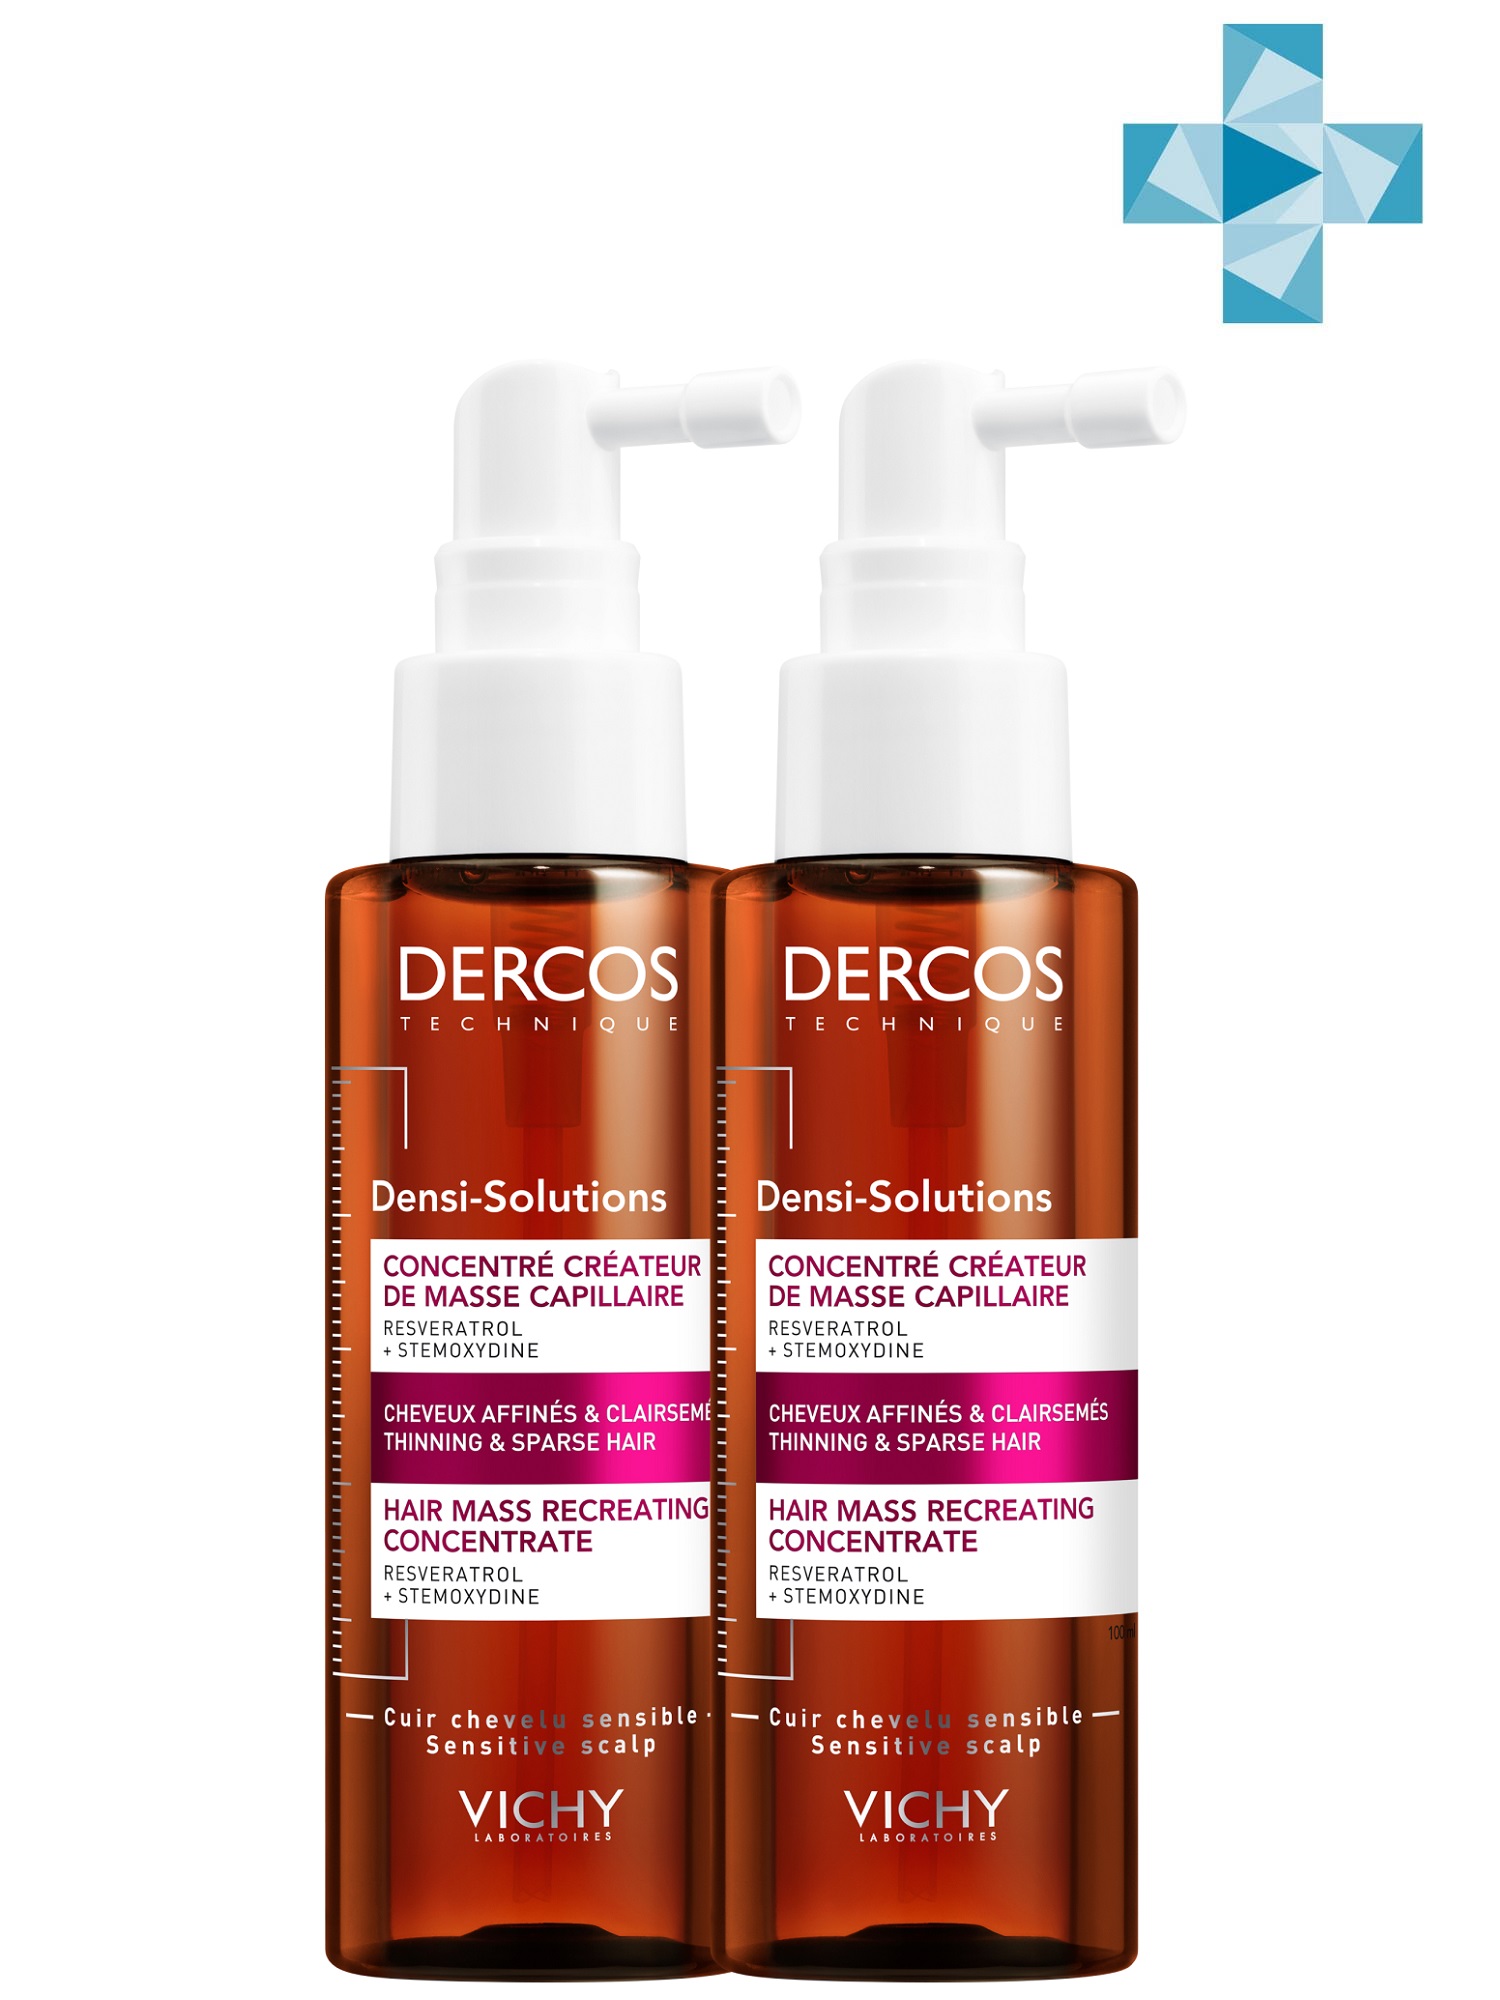 Vichy Комплект Сыворотка для роста волос Densi-Solutions, 2 х 100 мл (Vichy, Dercos Densi-Solutions)